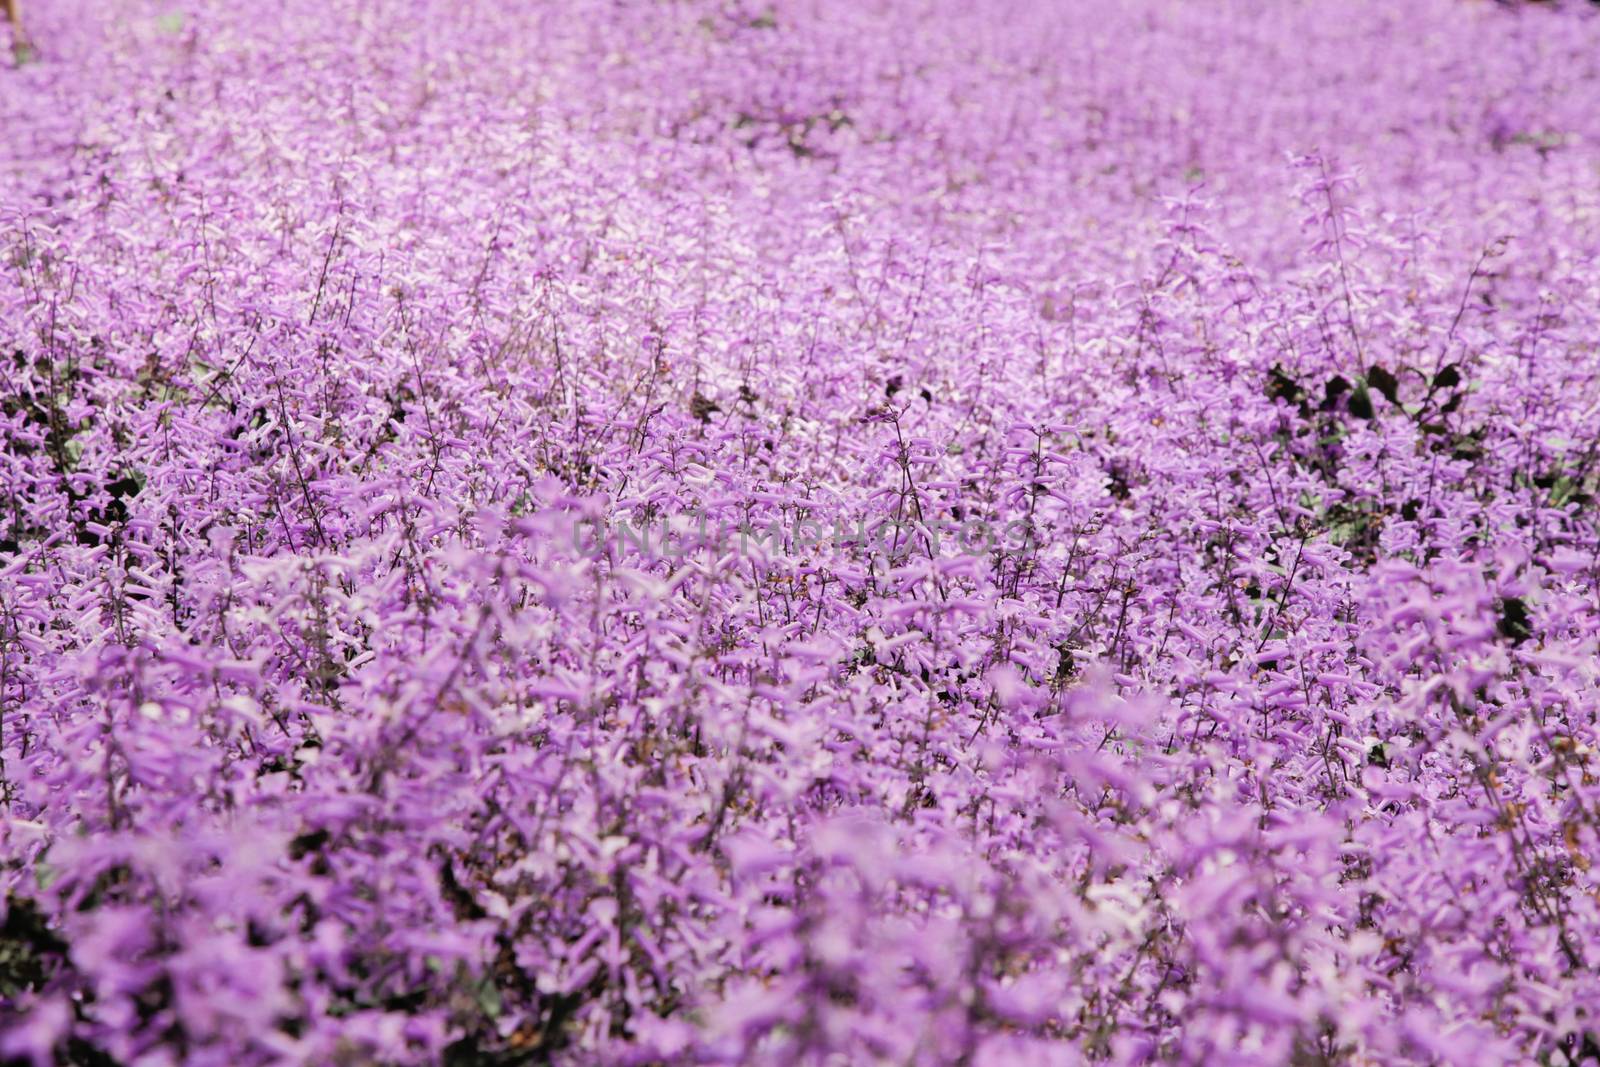 Lavender garden field closeup on one flower